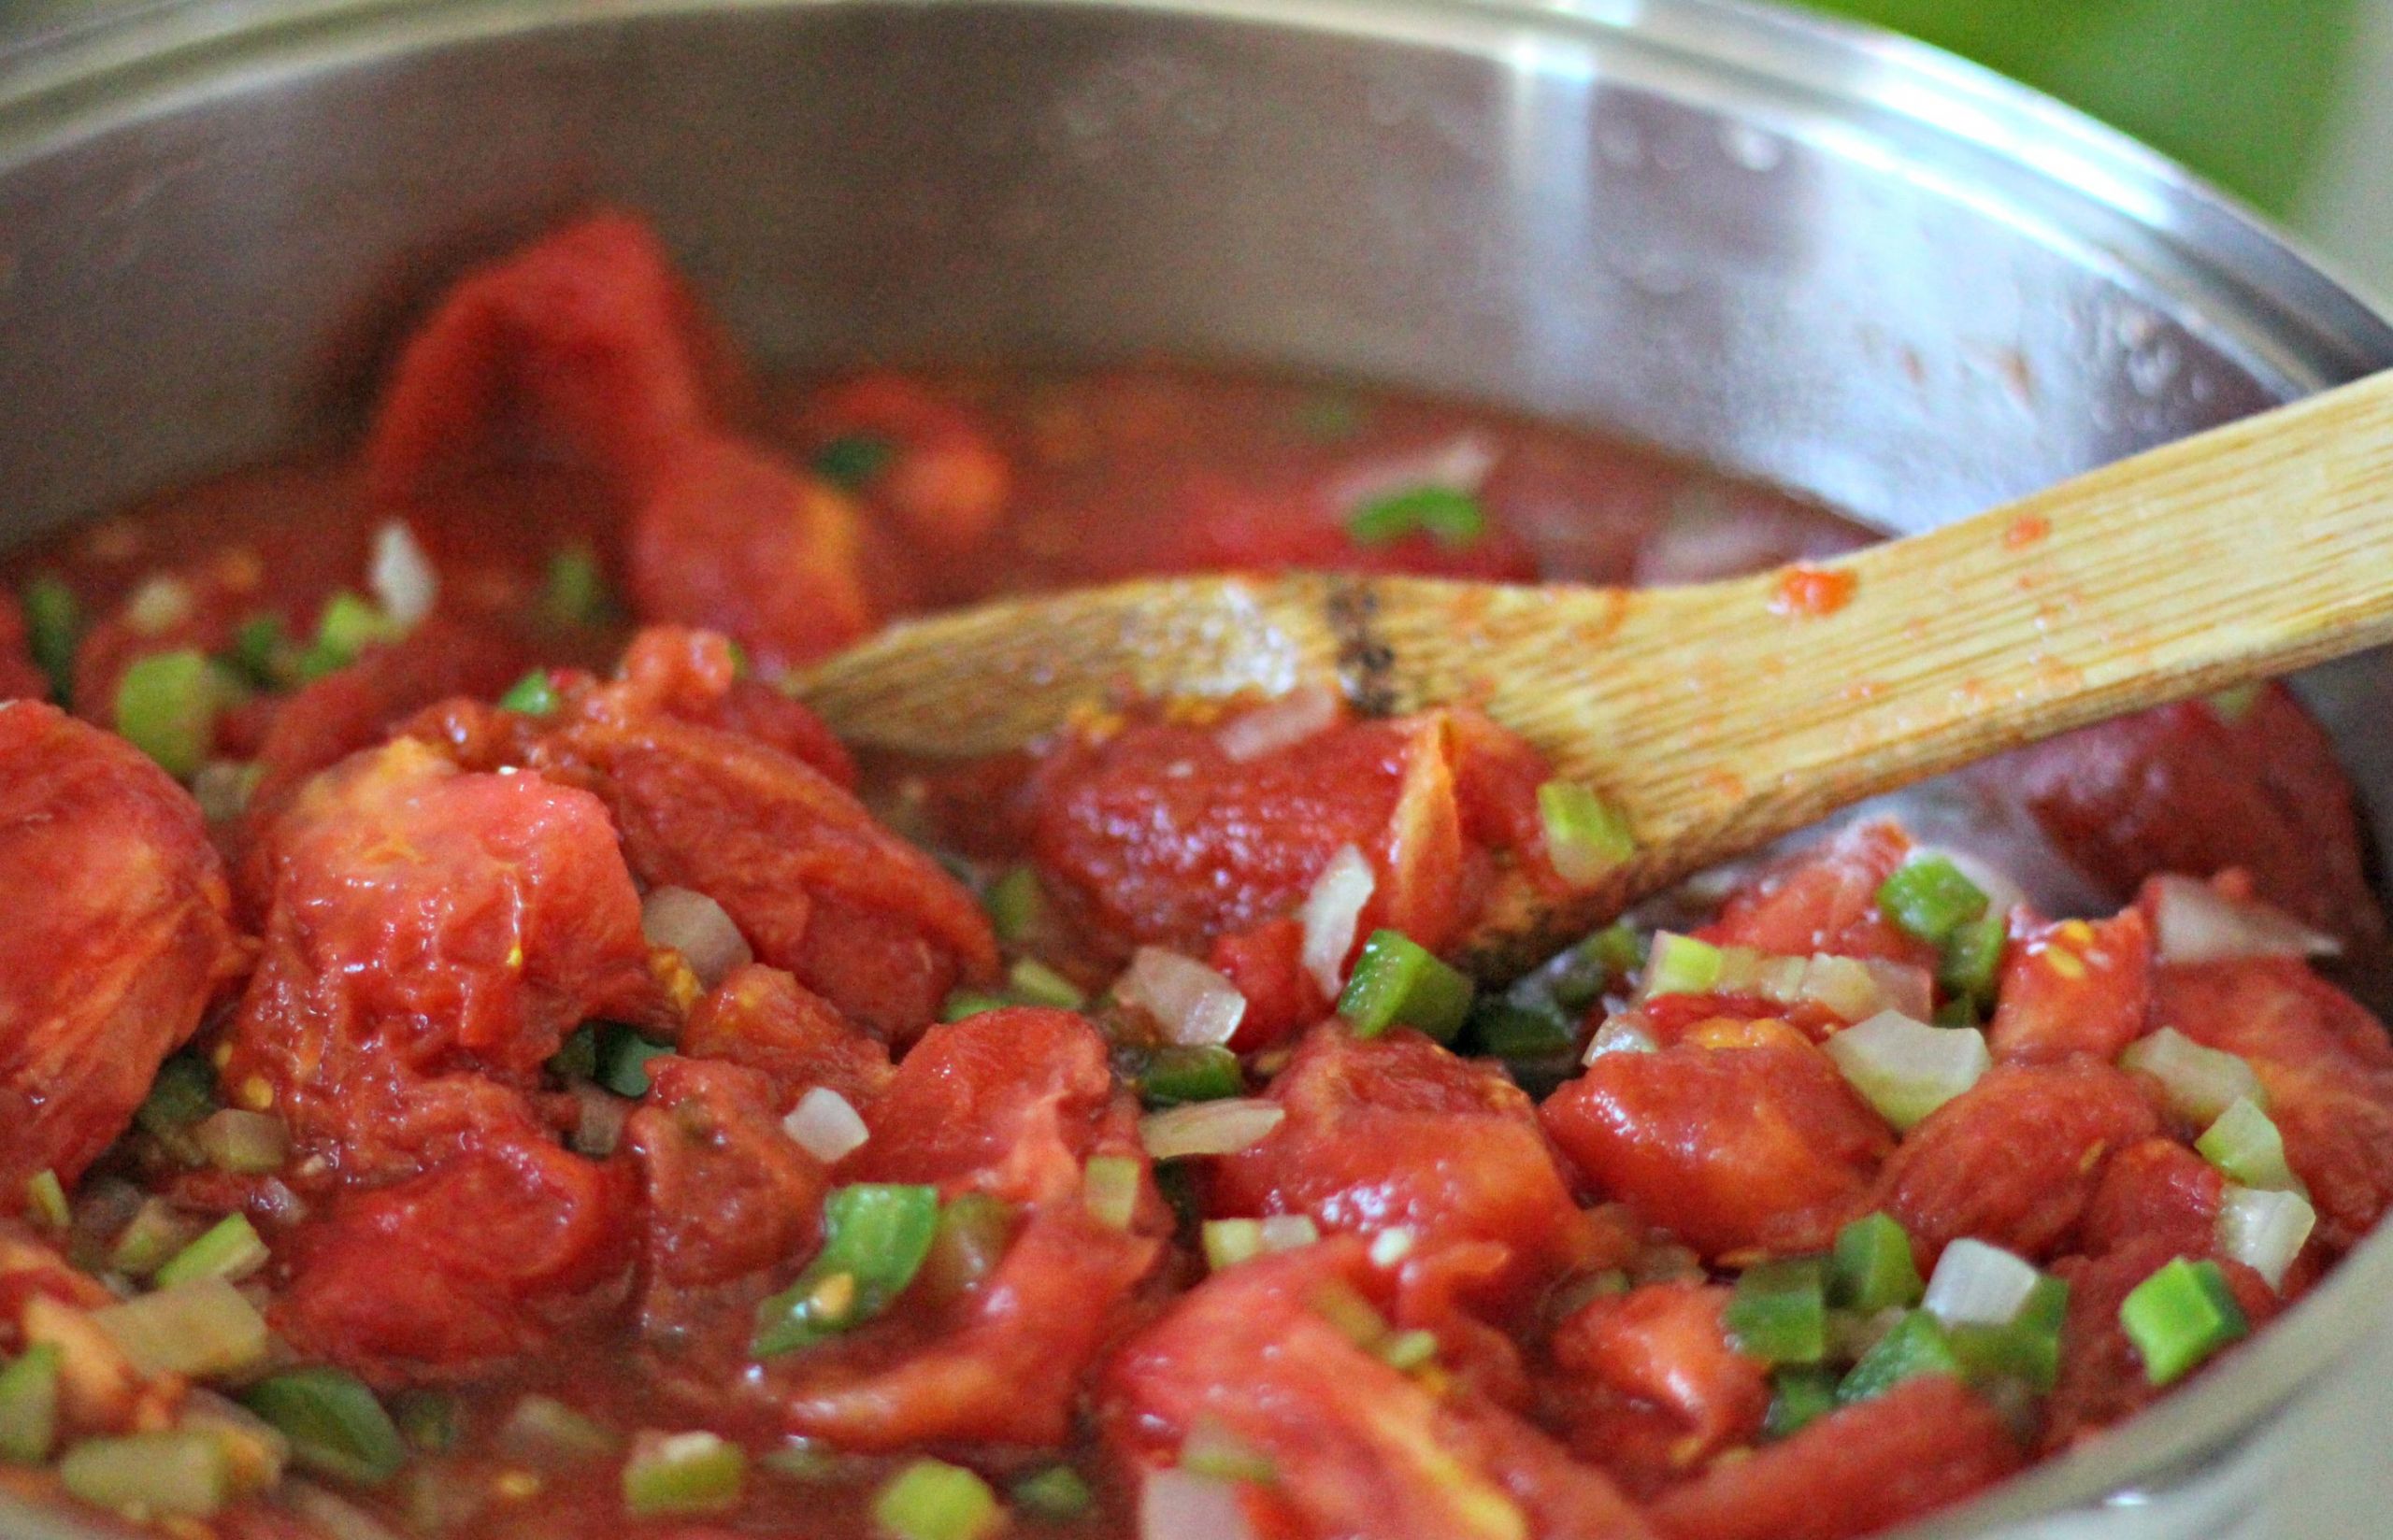 Homemade Spaghetti Sauce From Fresh Tomatoes
 Homemade Spaghetti Sauce with Garden Fresh Tomatoes